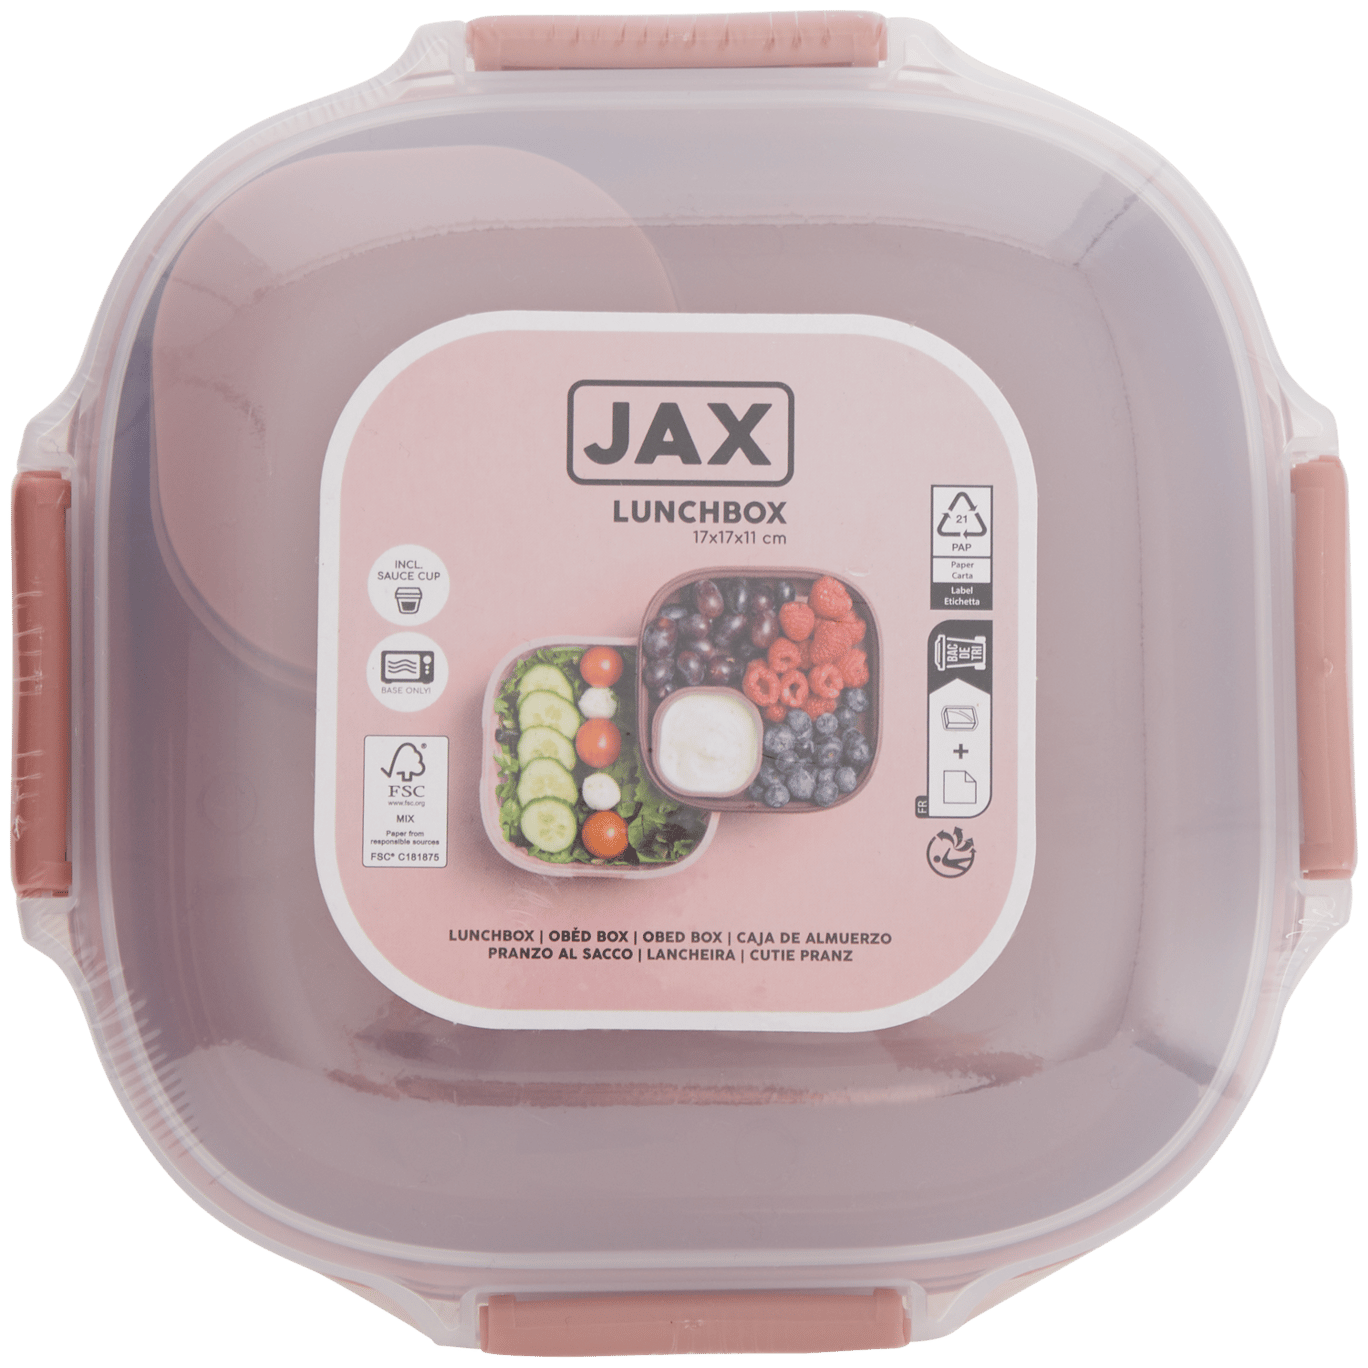 Jax Lunchbox